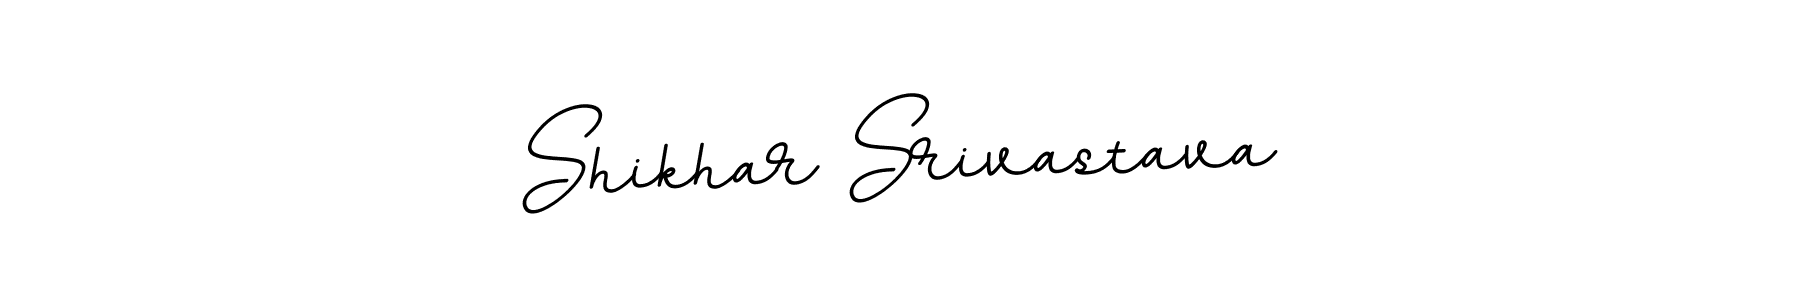 How to Draw Shikhar Srivastava signature style? BallpointsItalic-DORy9 is a latest design signature styles for name Shikhar Srivastava. Shikhar Srivastava signature style 11 images and pictures png